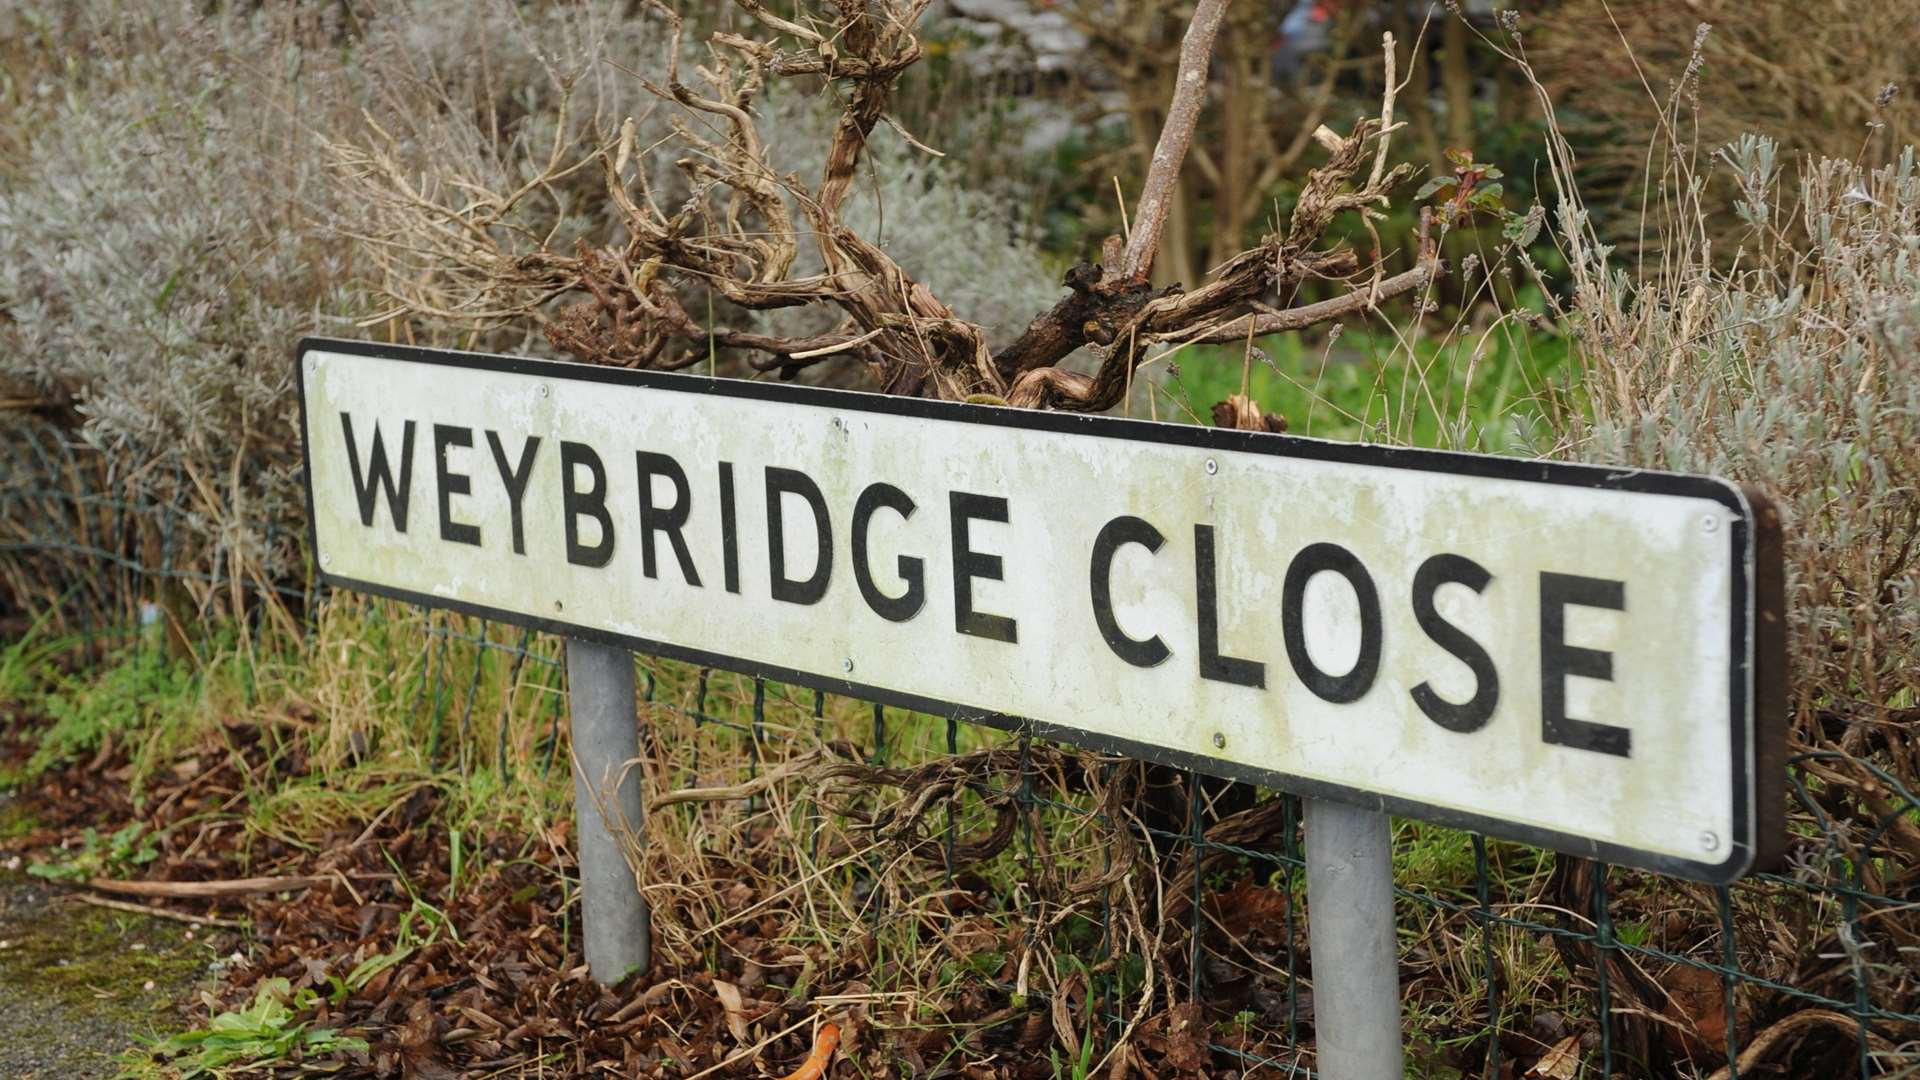 The shooting happened in Weybridge Close